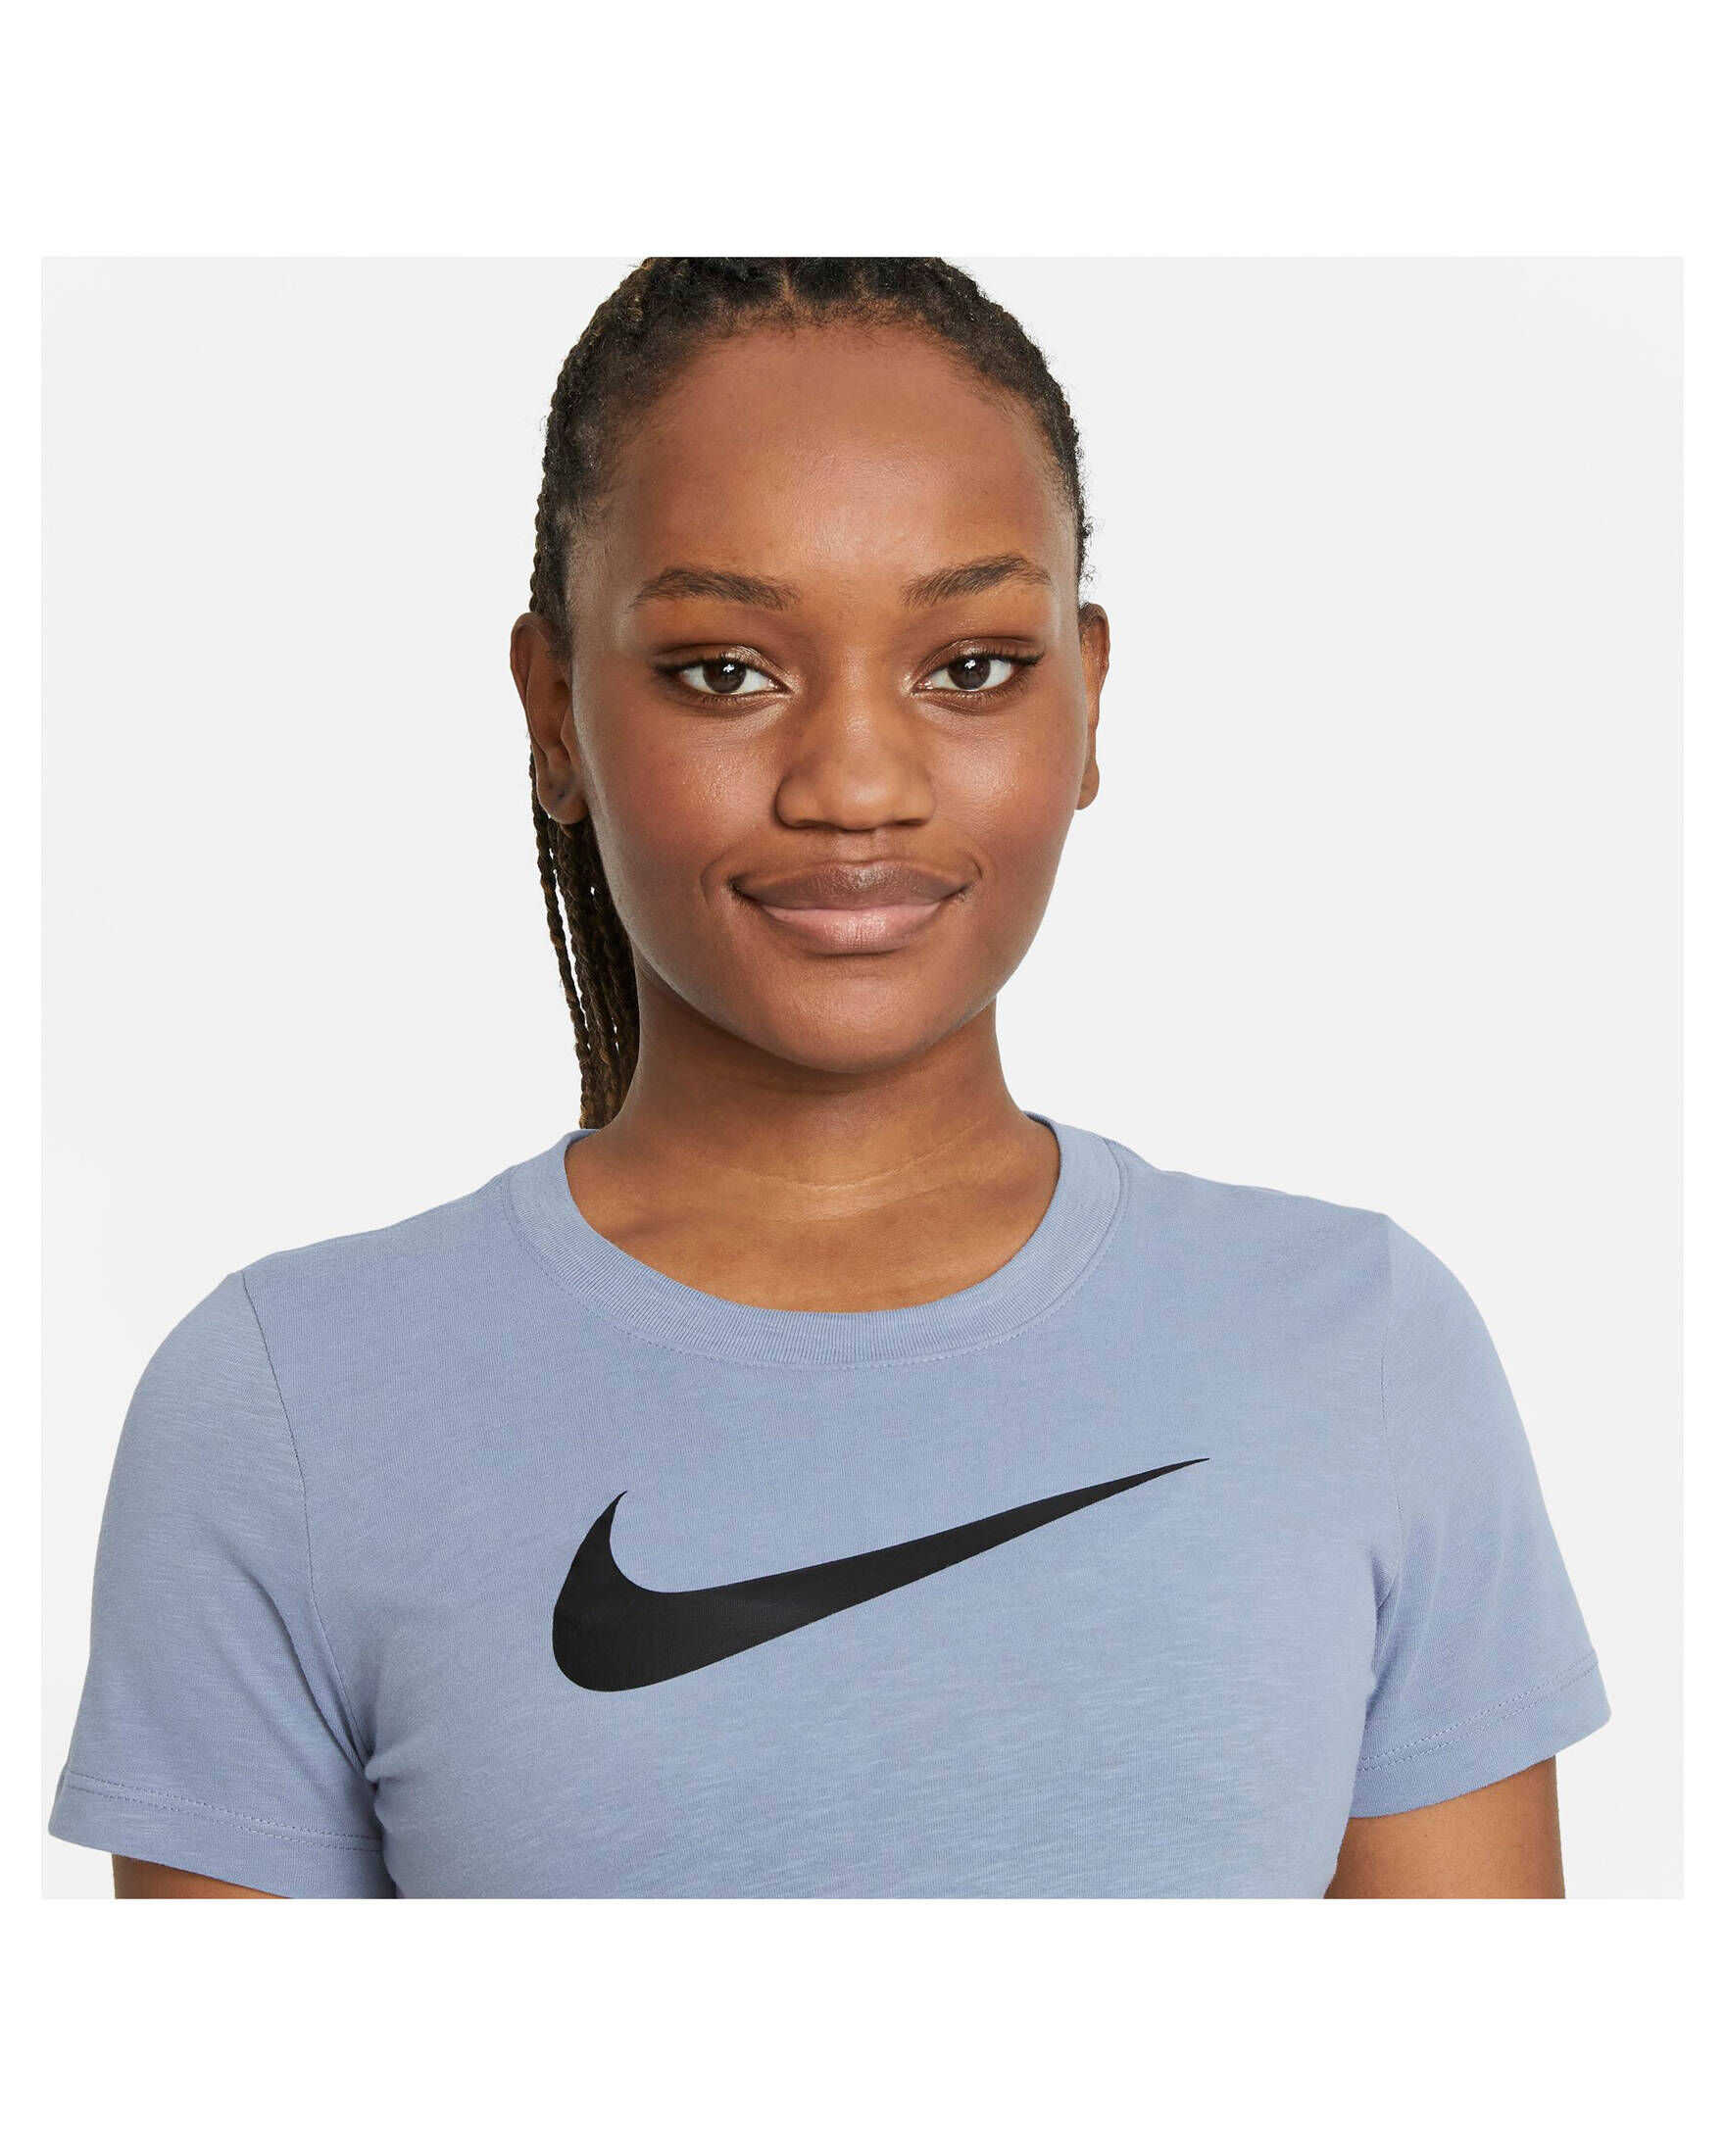 Afdaling onwetendheid ik ontbijt Nike Damen Trainingsshirt kaufen | engelhorn